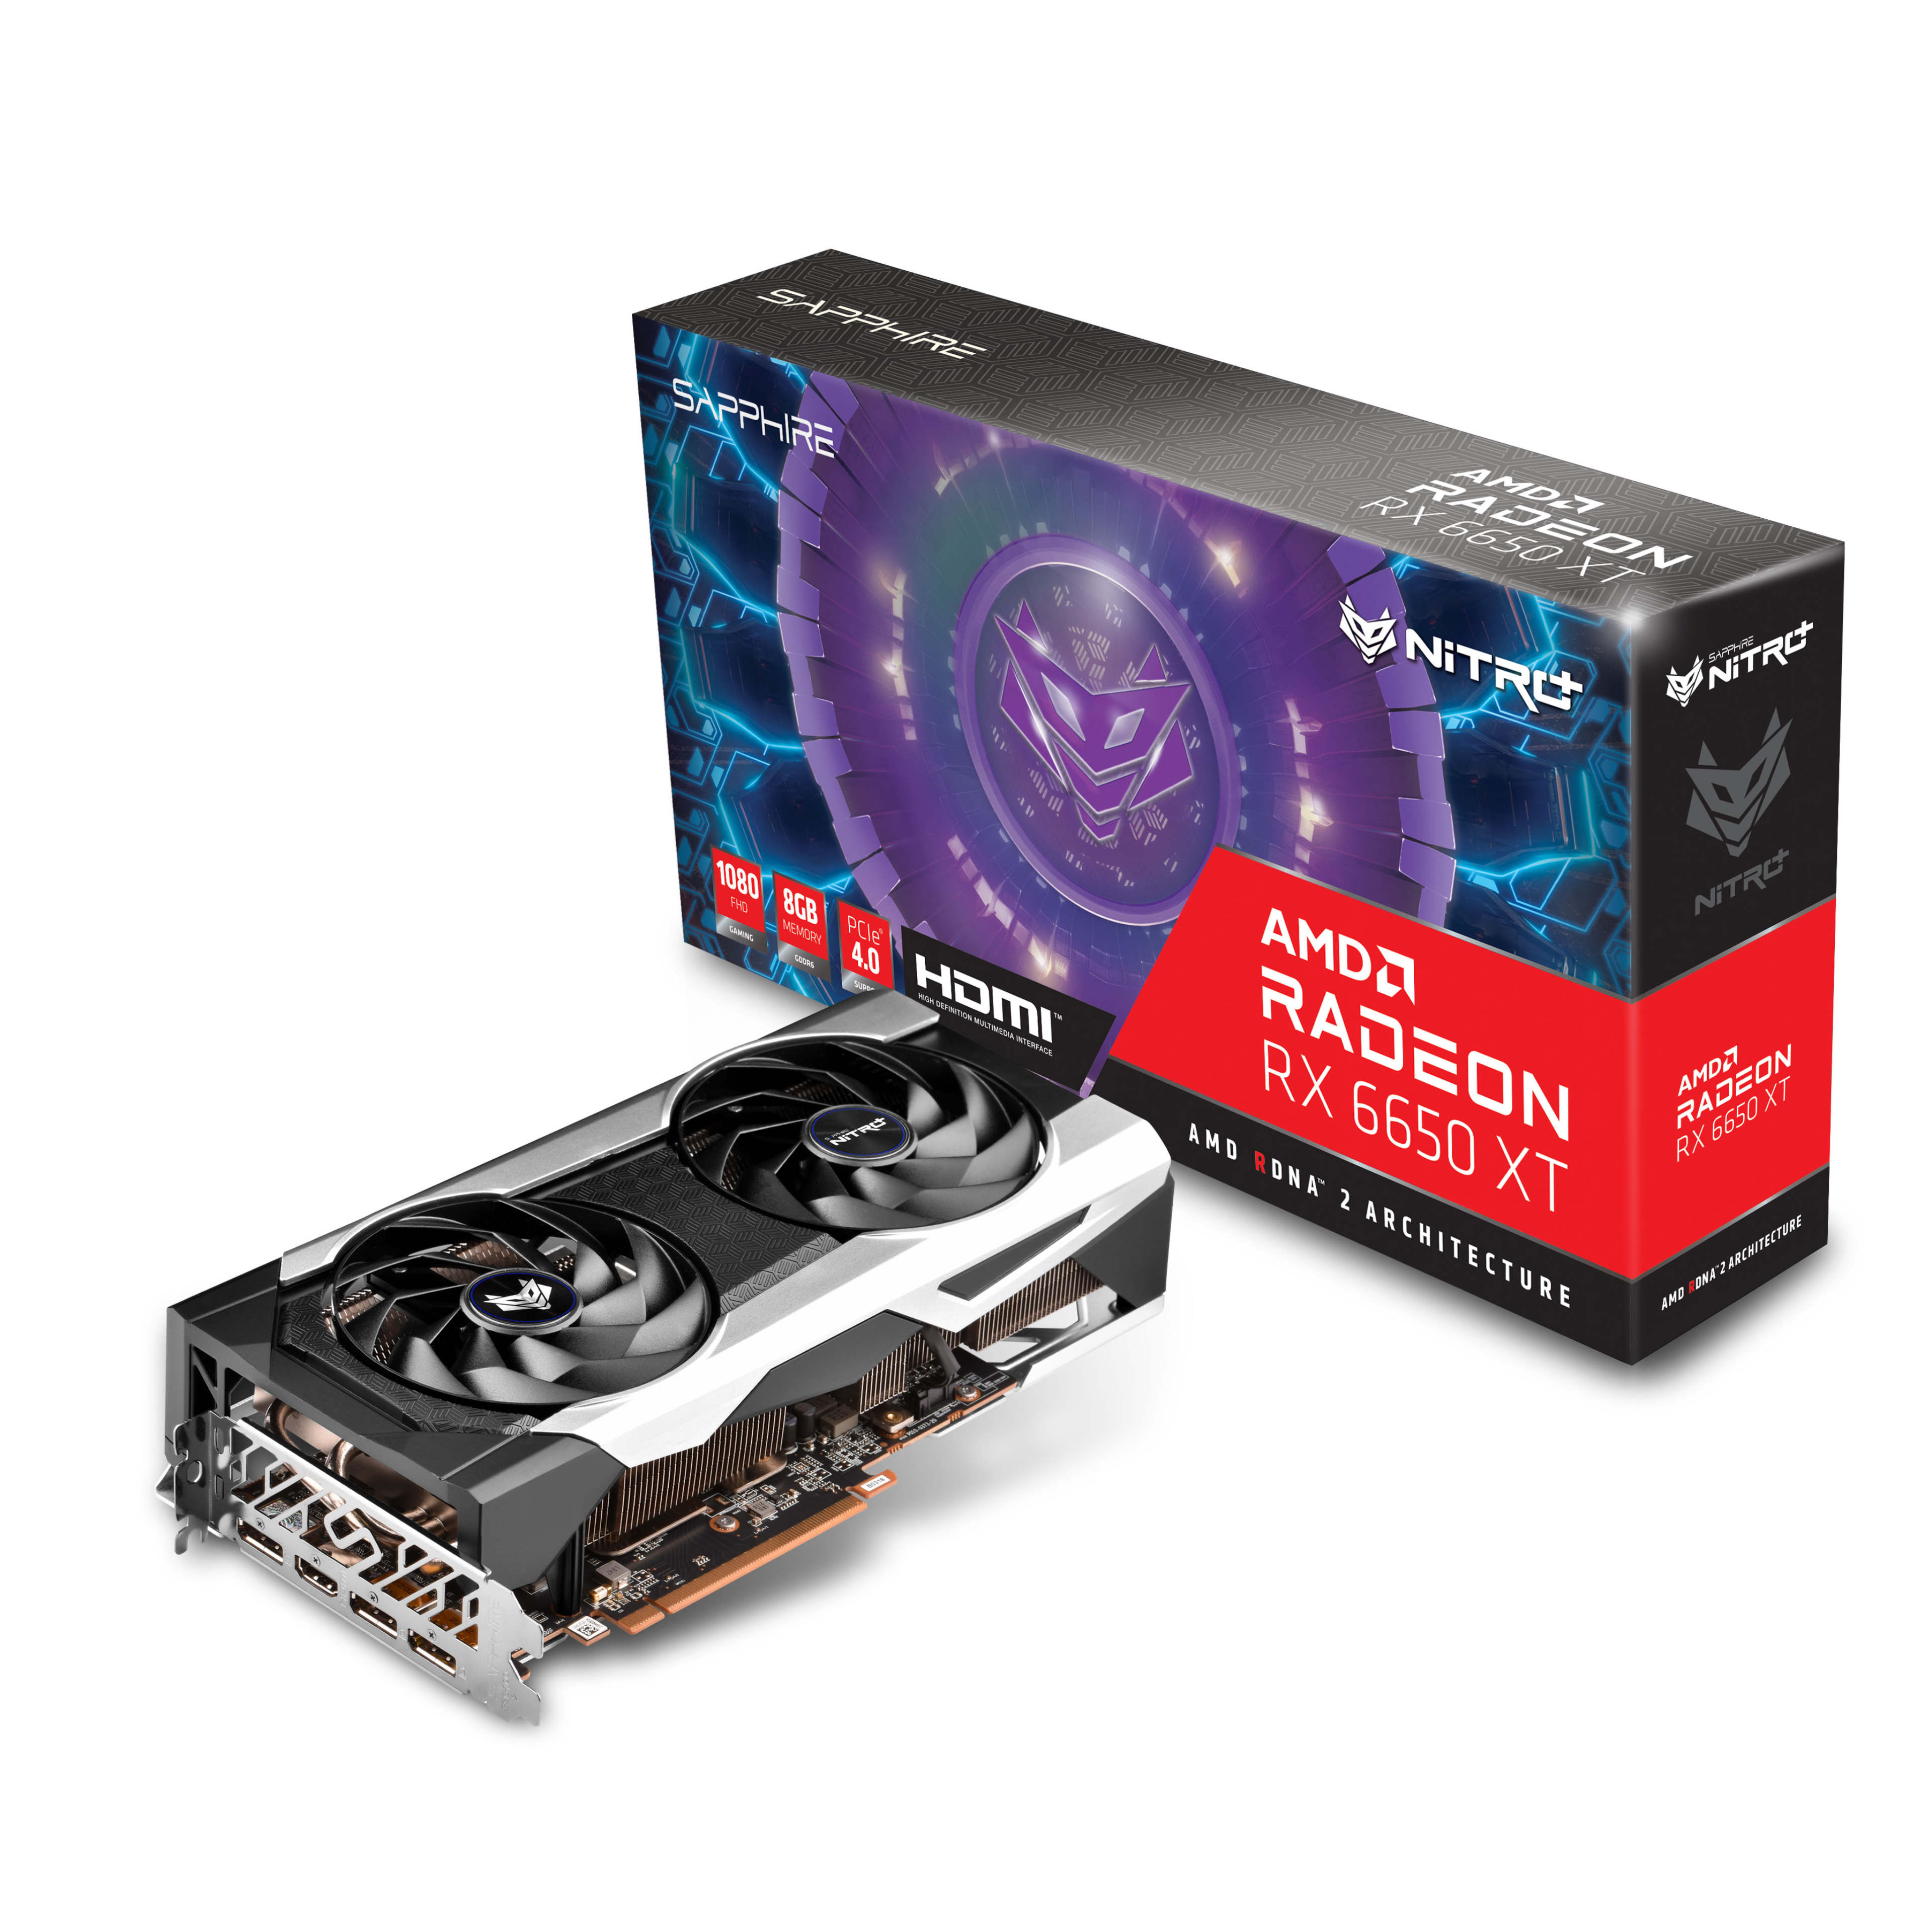 Sapphire Nitro+ Radeon RX 6650 XT Desktop-GPU Review: a powerful